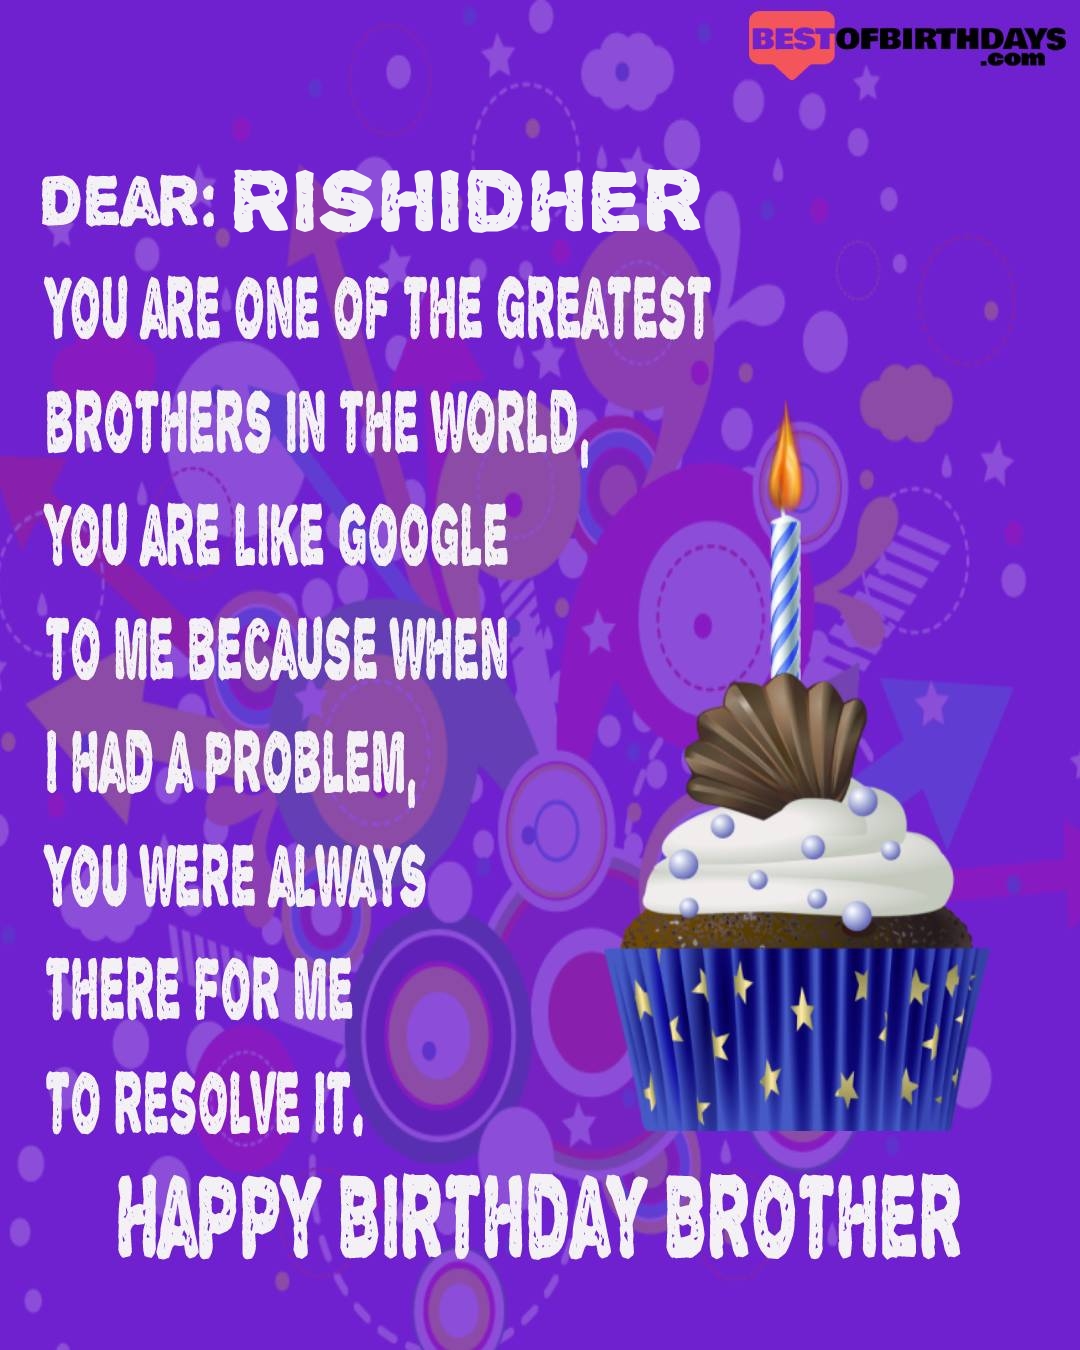 Happy birthday rishidher bhai brother bro